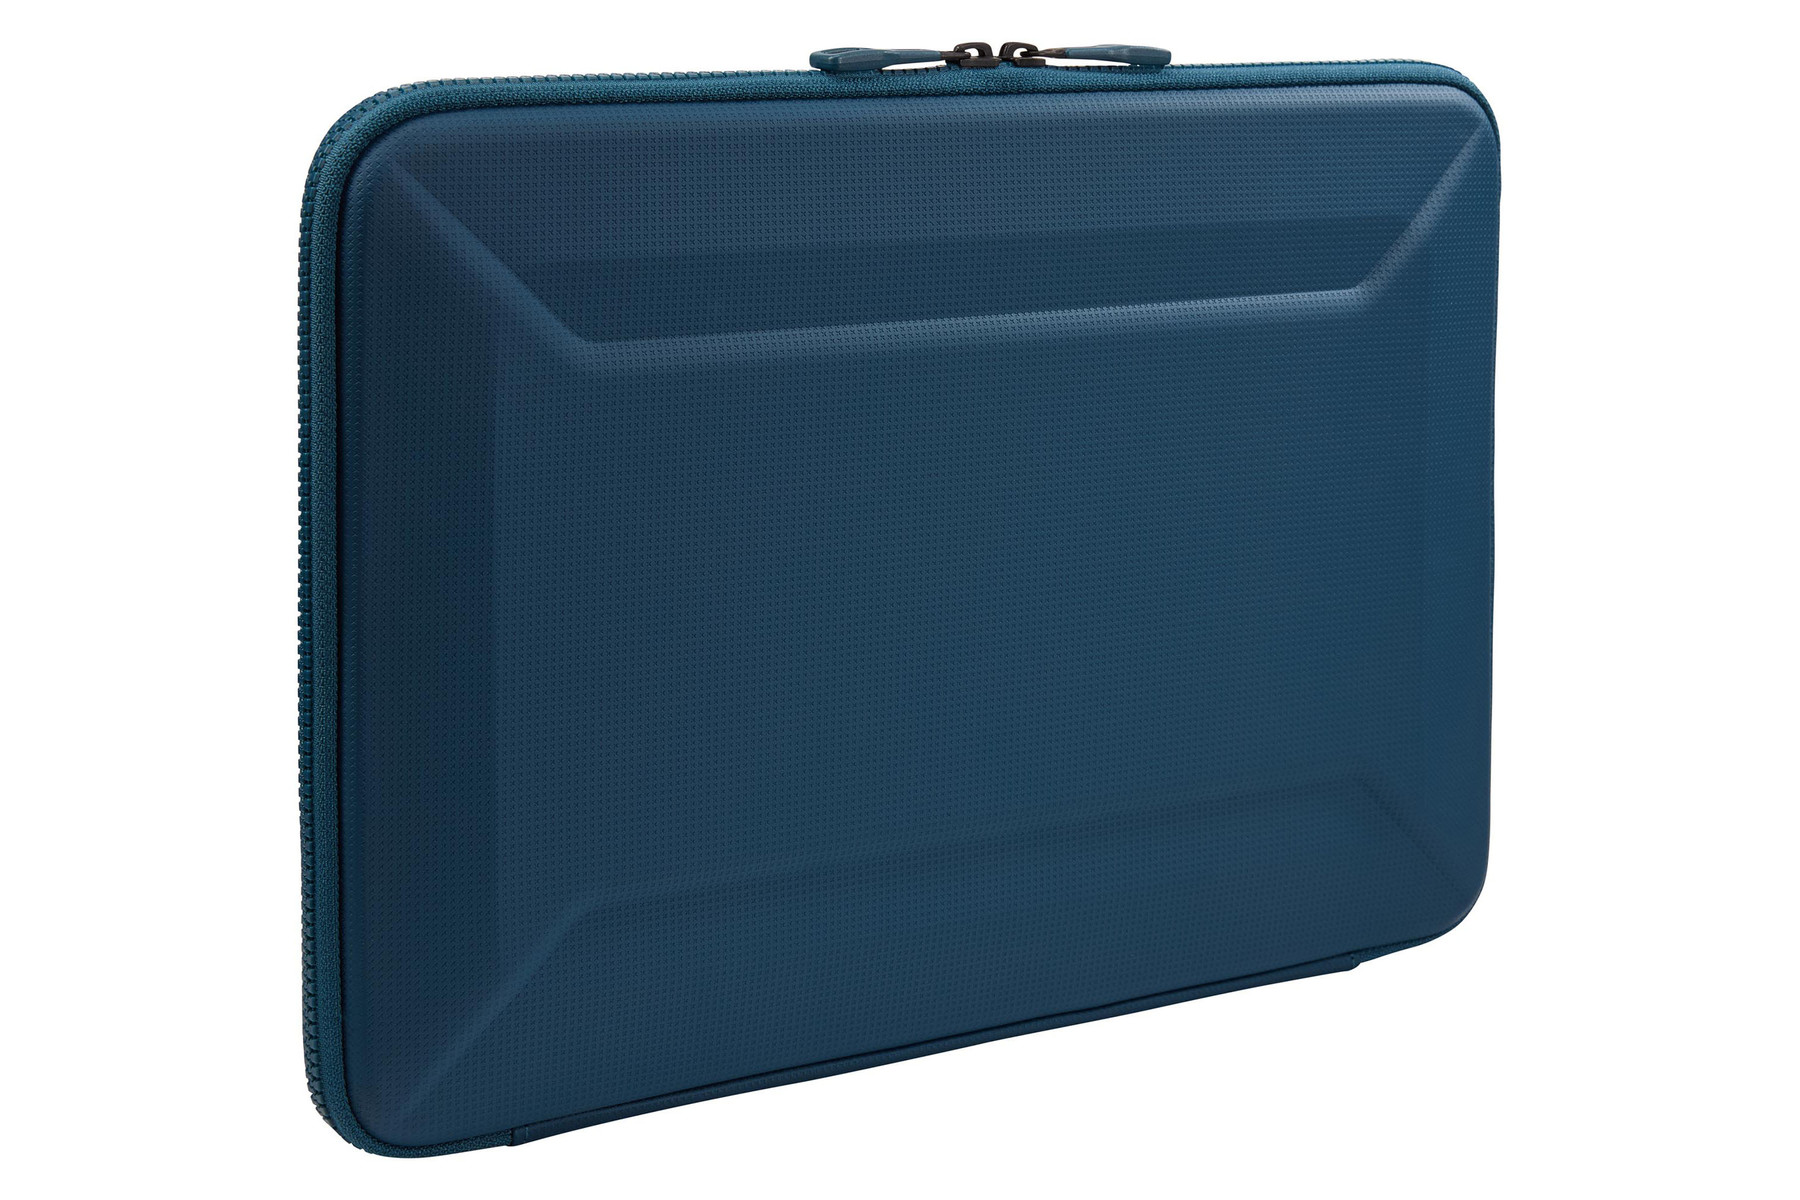 Чехол Thule 16-inch для MacBook Pro Gauntlet Sleeve Blue TGSE2357BLU / 3204524 сменная батарея для macbook air 11 дюймов a1465 2012 2015 и a1370 mid 2011 a1406 a1495 аккумулятор для macbook air 11 дюймов